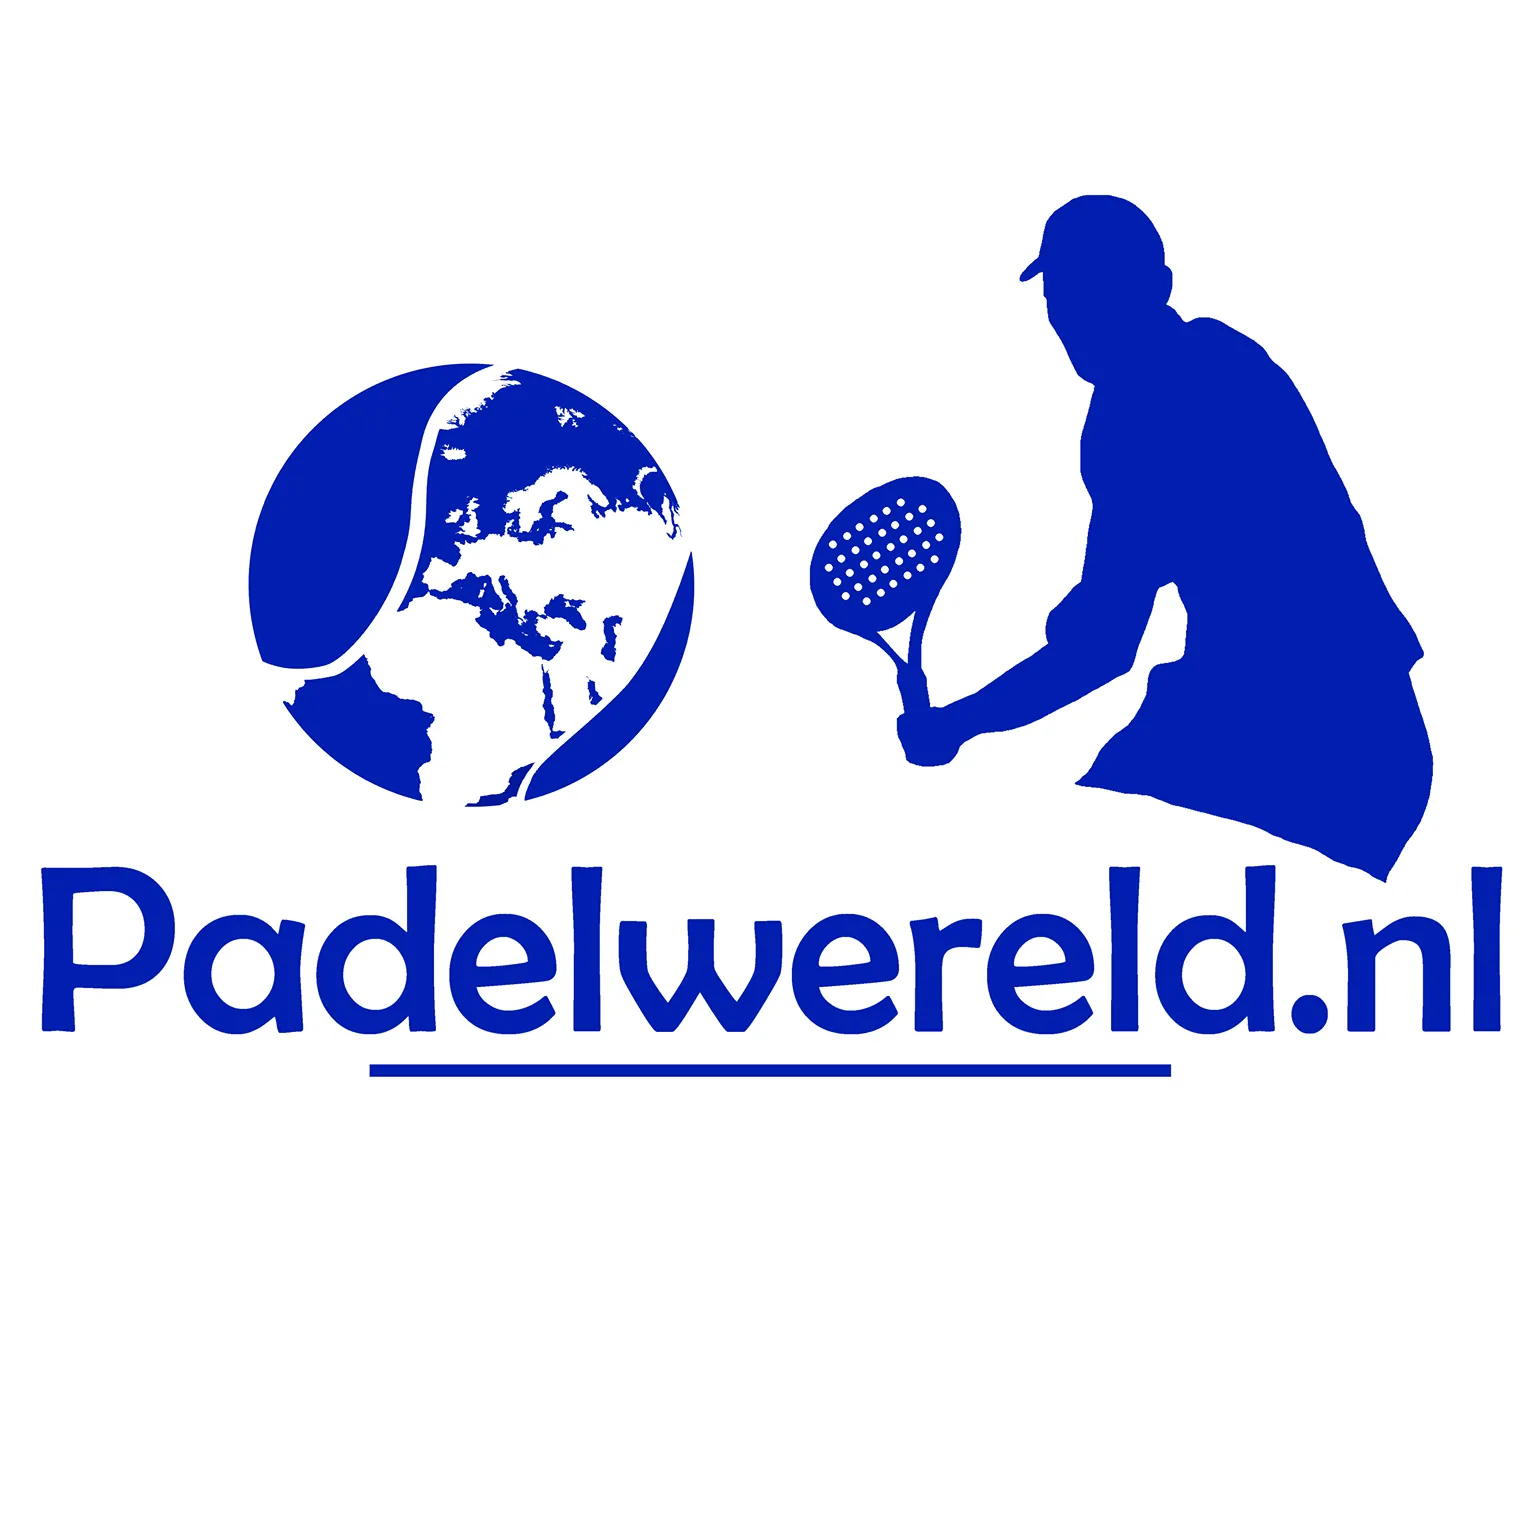 padelwereld.nl